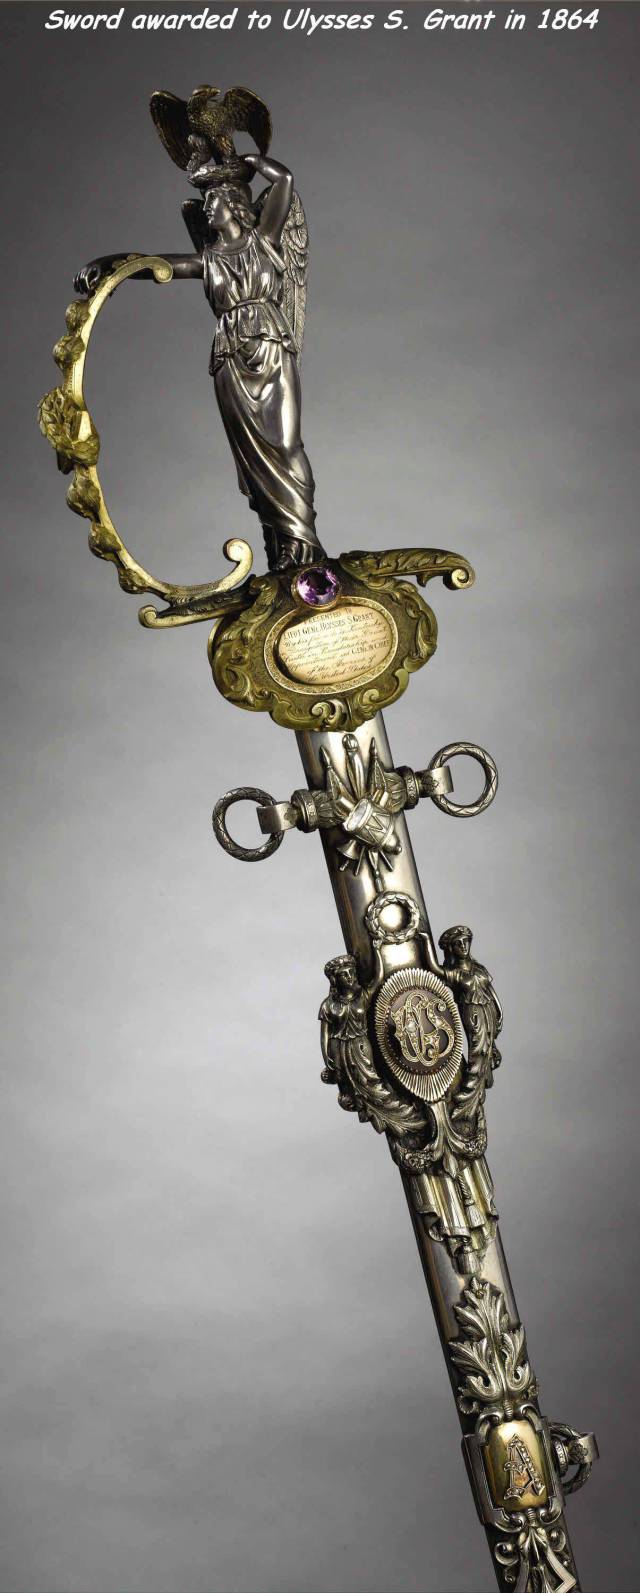 ulysses s grant sword - Sword awarded to Ulysses S. Grant in 1864 Ons Sdt Sensore